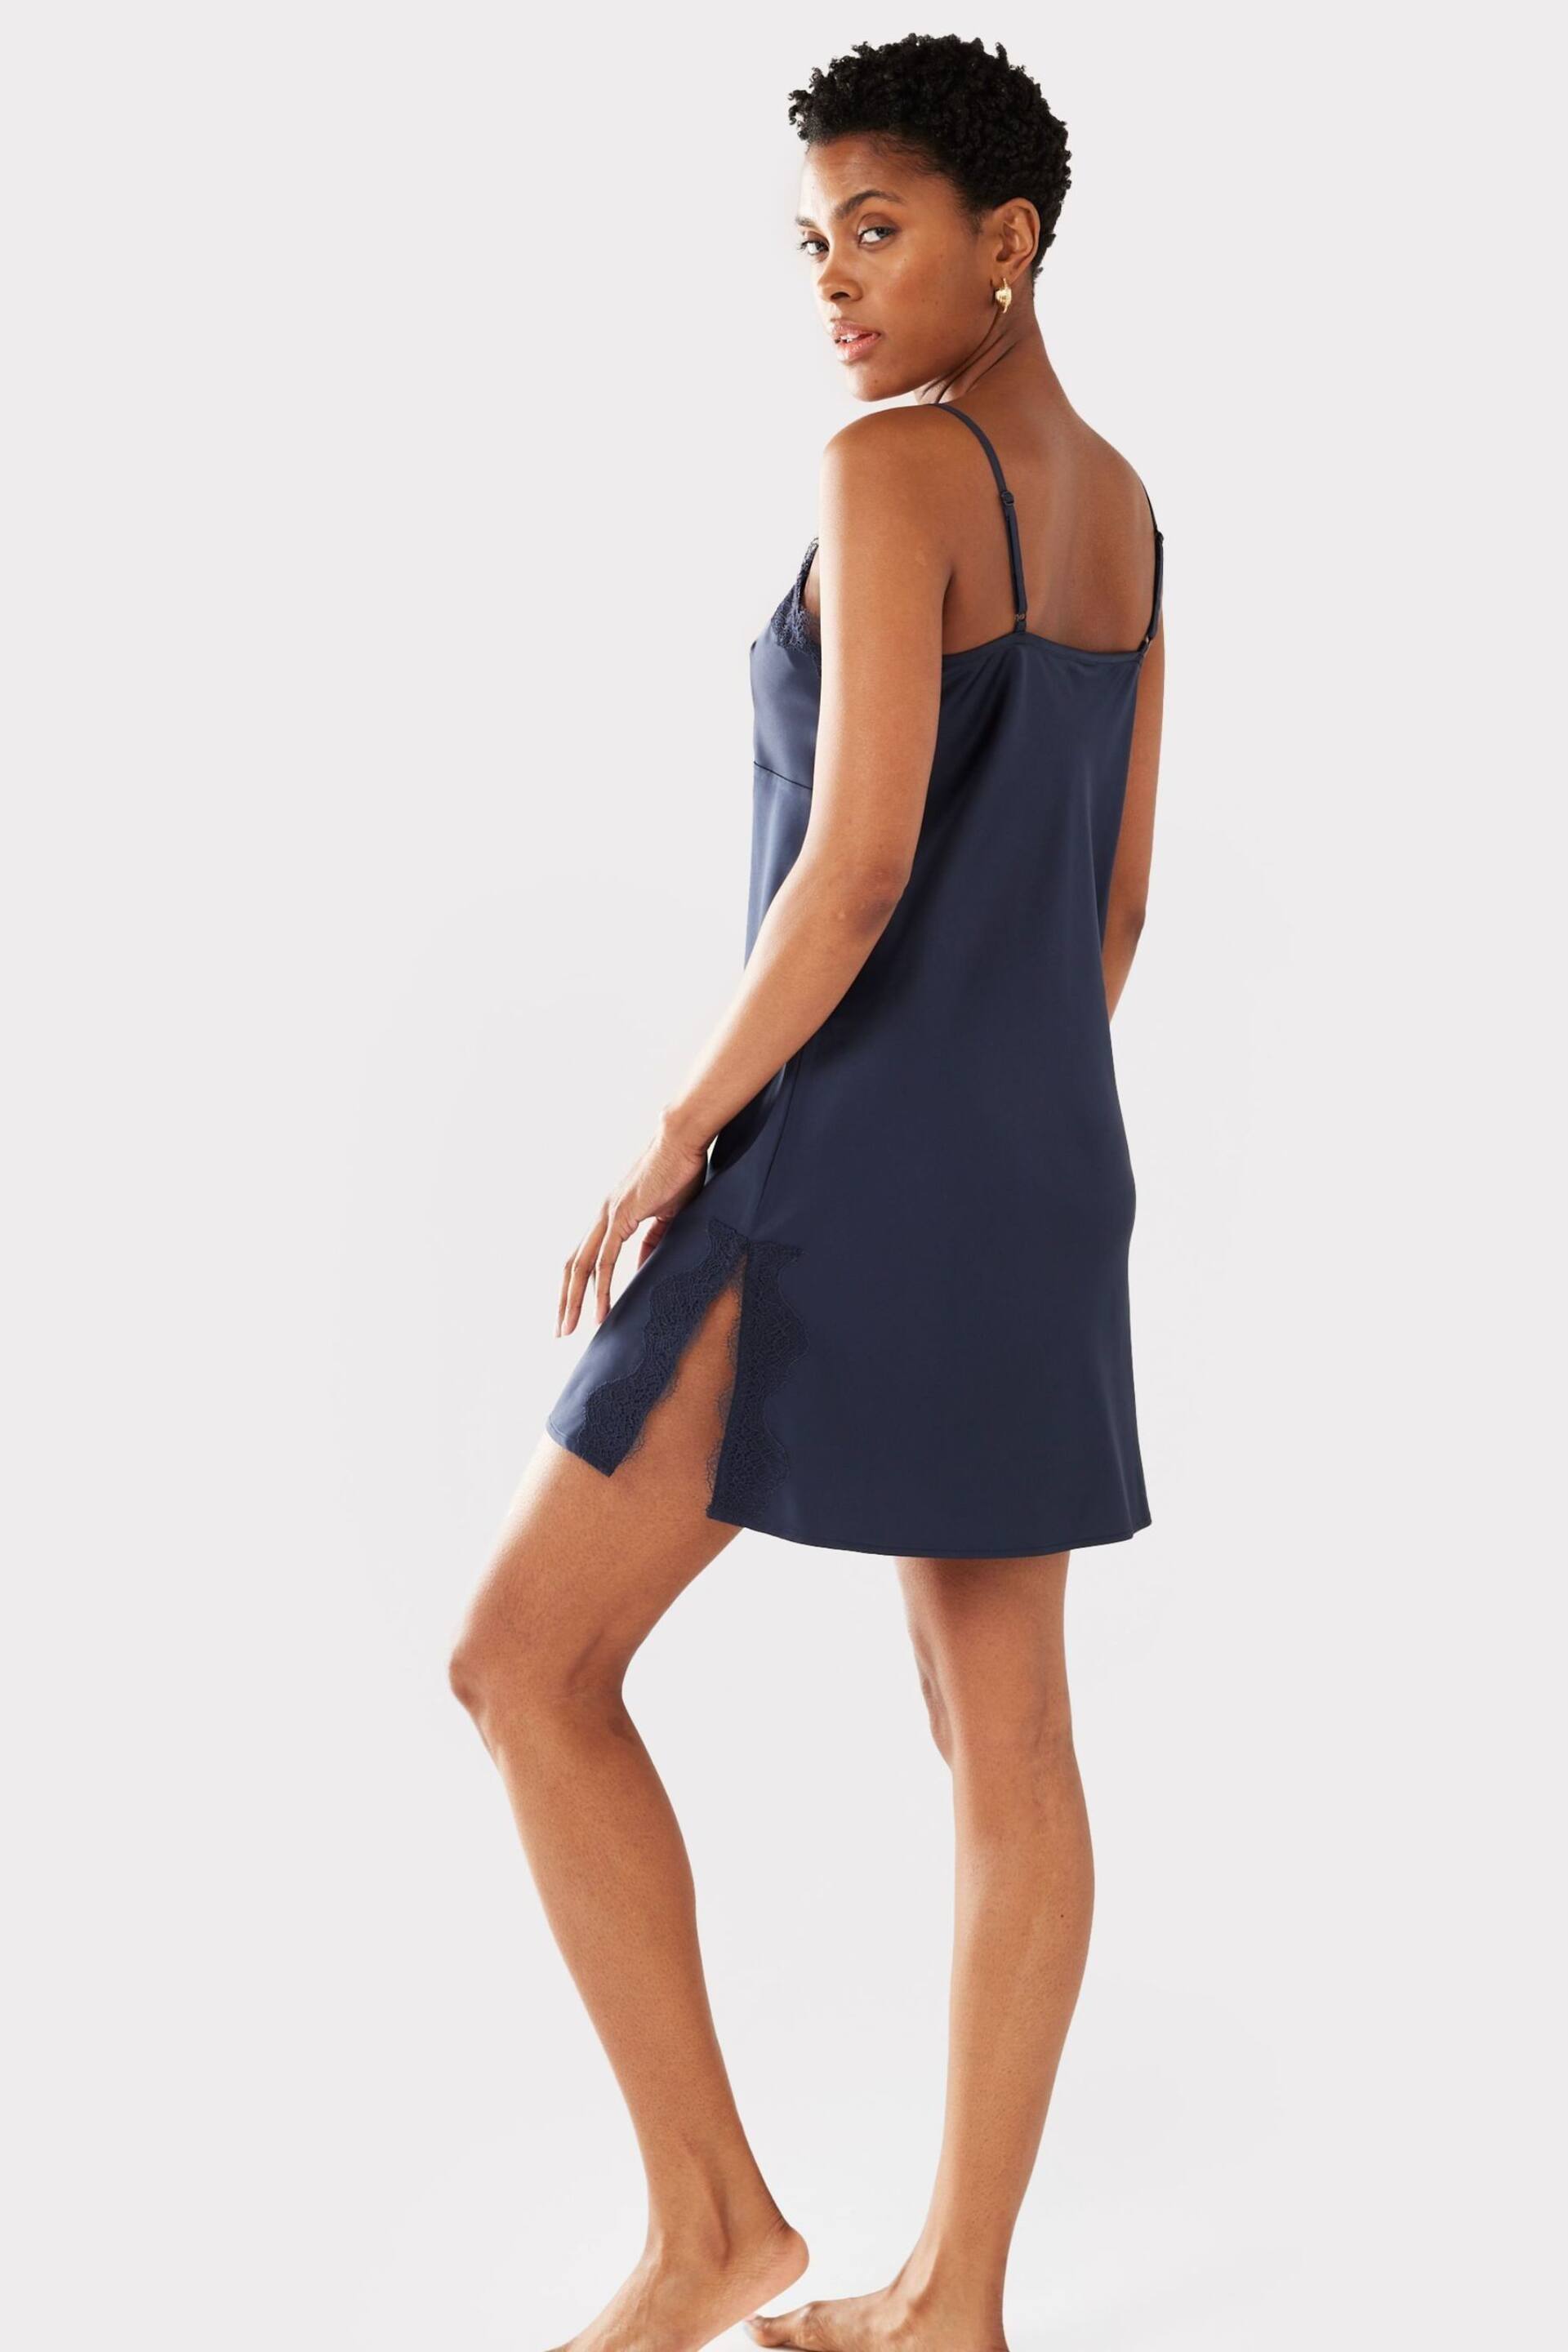 Chelsea Peers Navy Blue Satin Lace Trim Slip Nightdress - Image 2 of 5